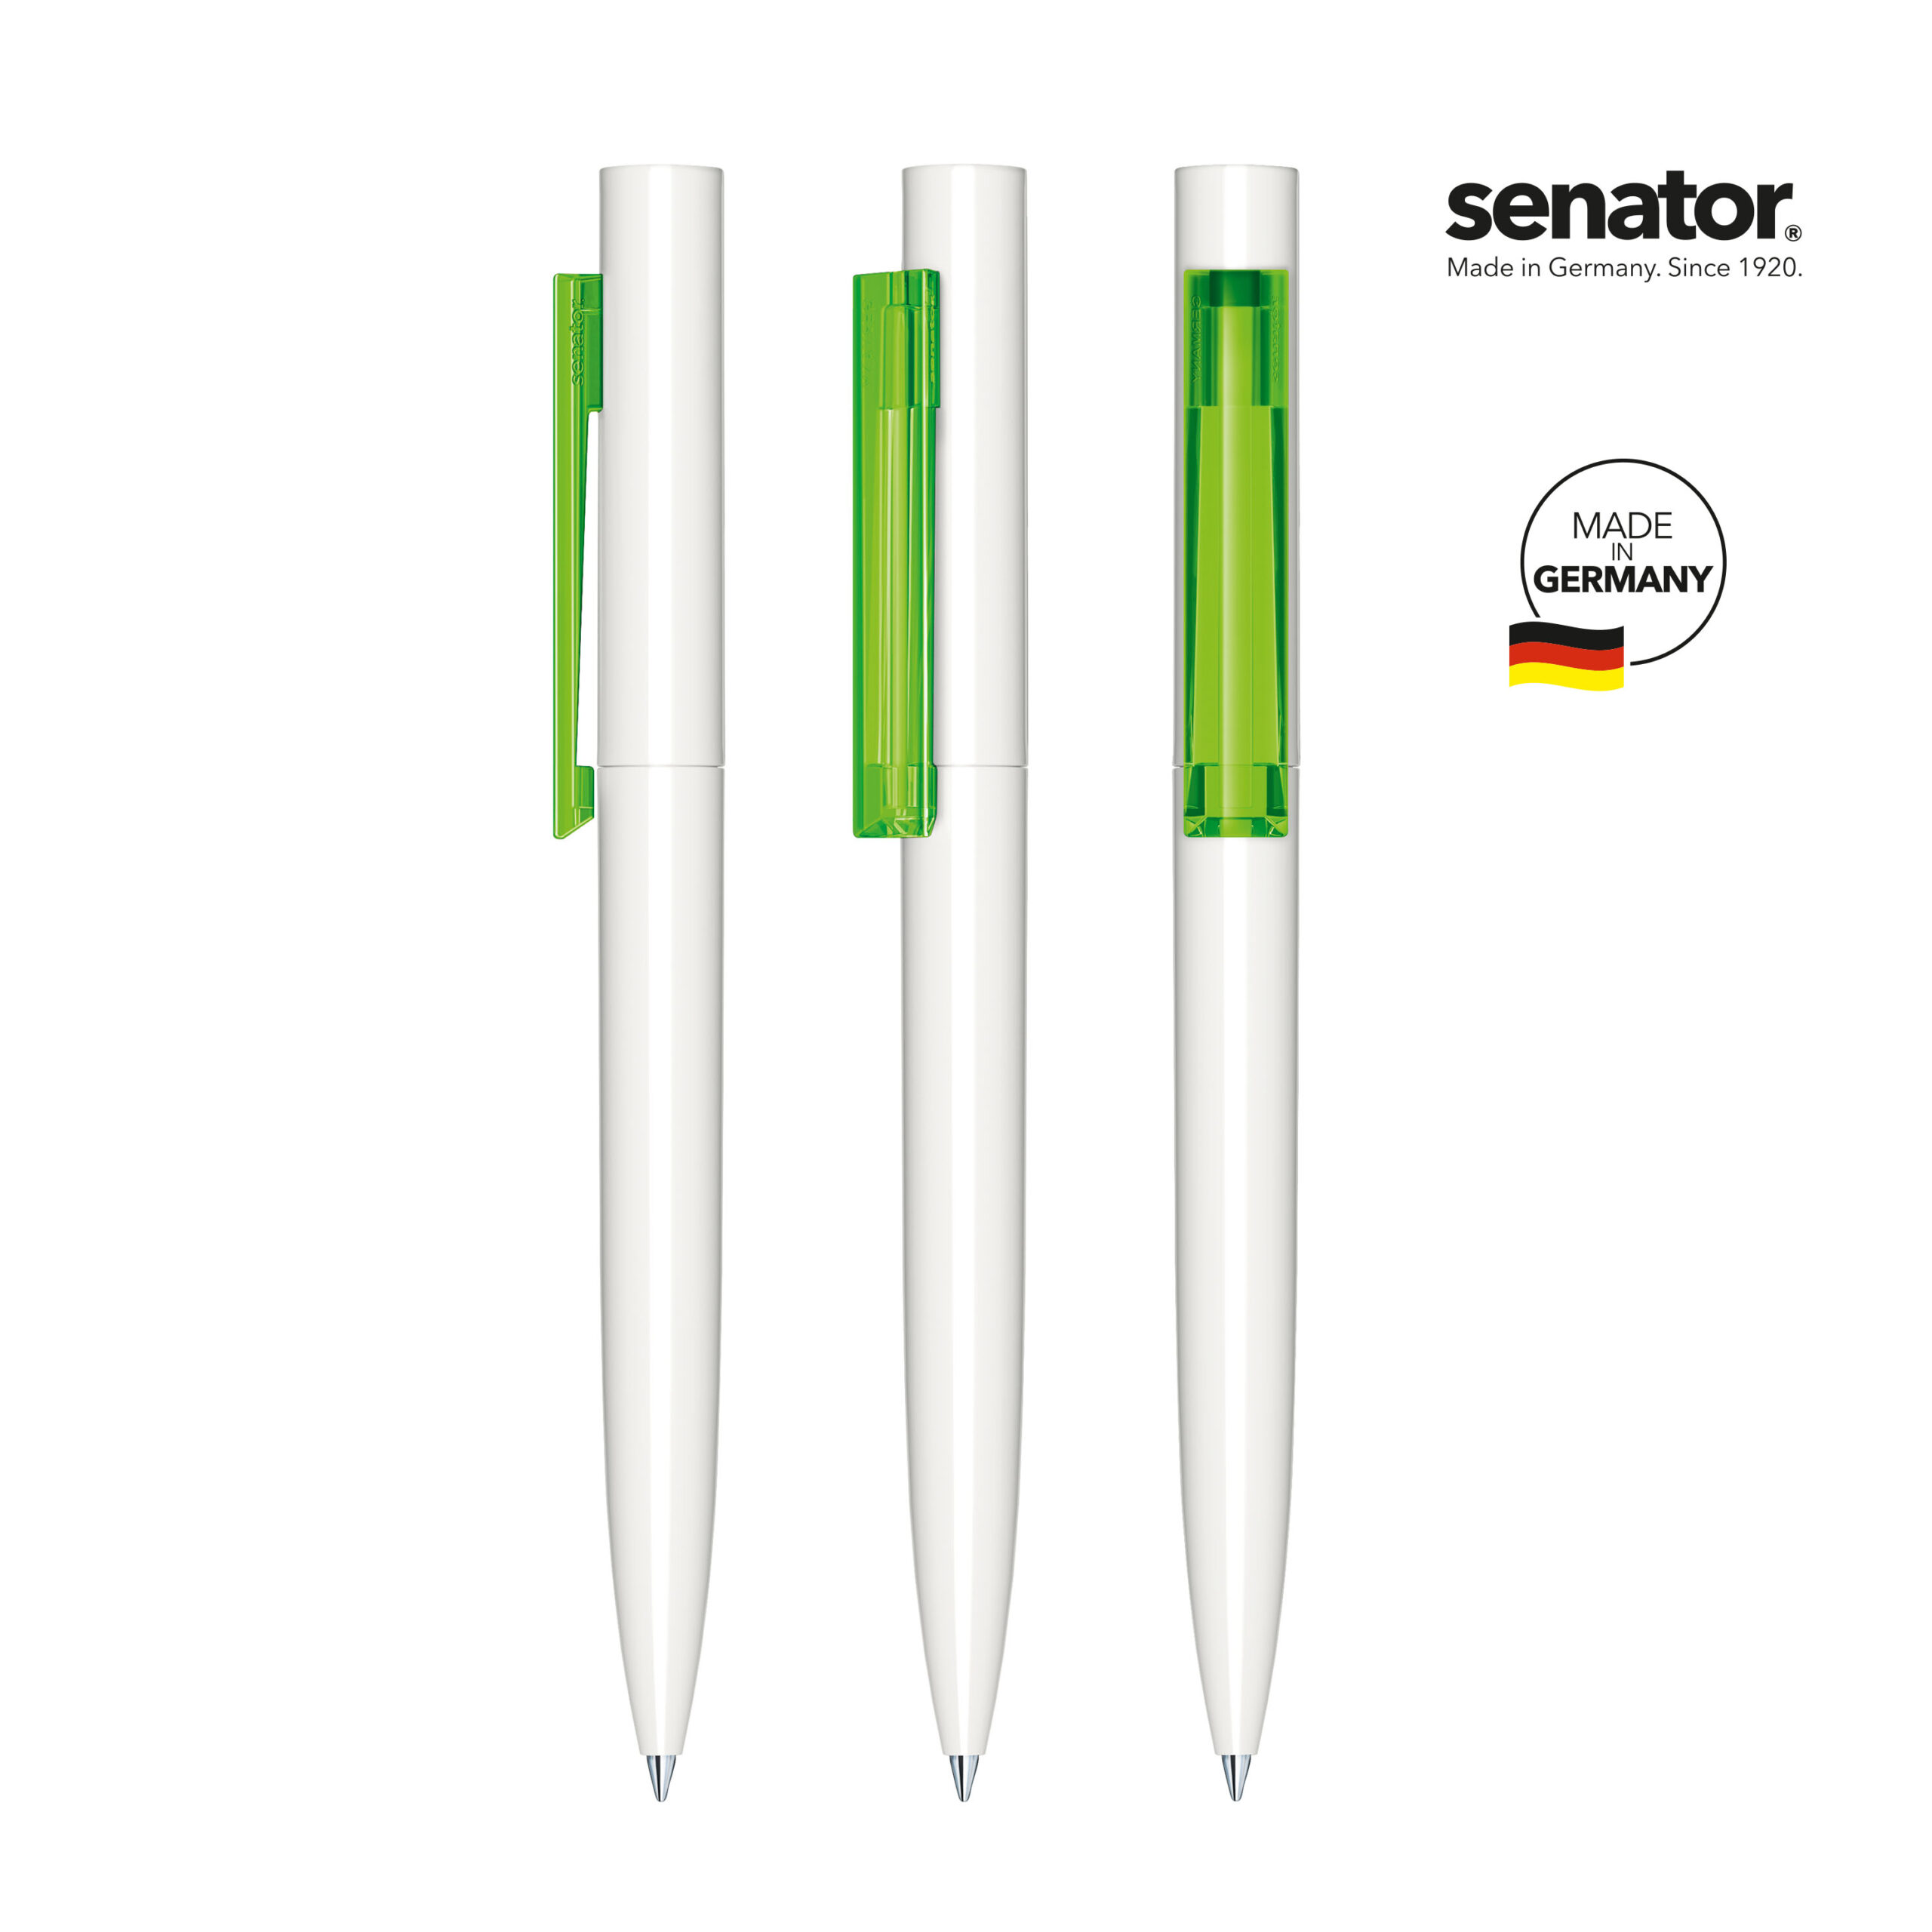 3280-senator-headliner-polished-basic-pms-376-5-p